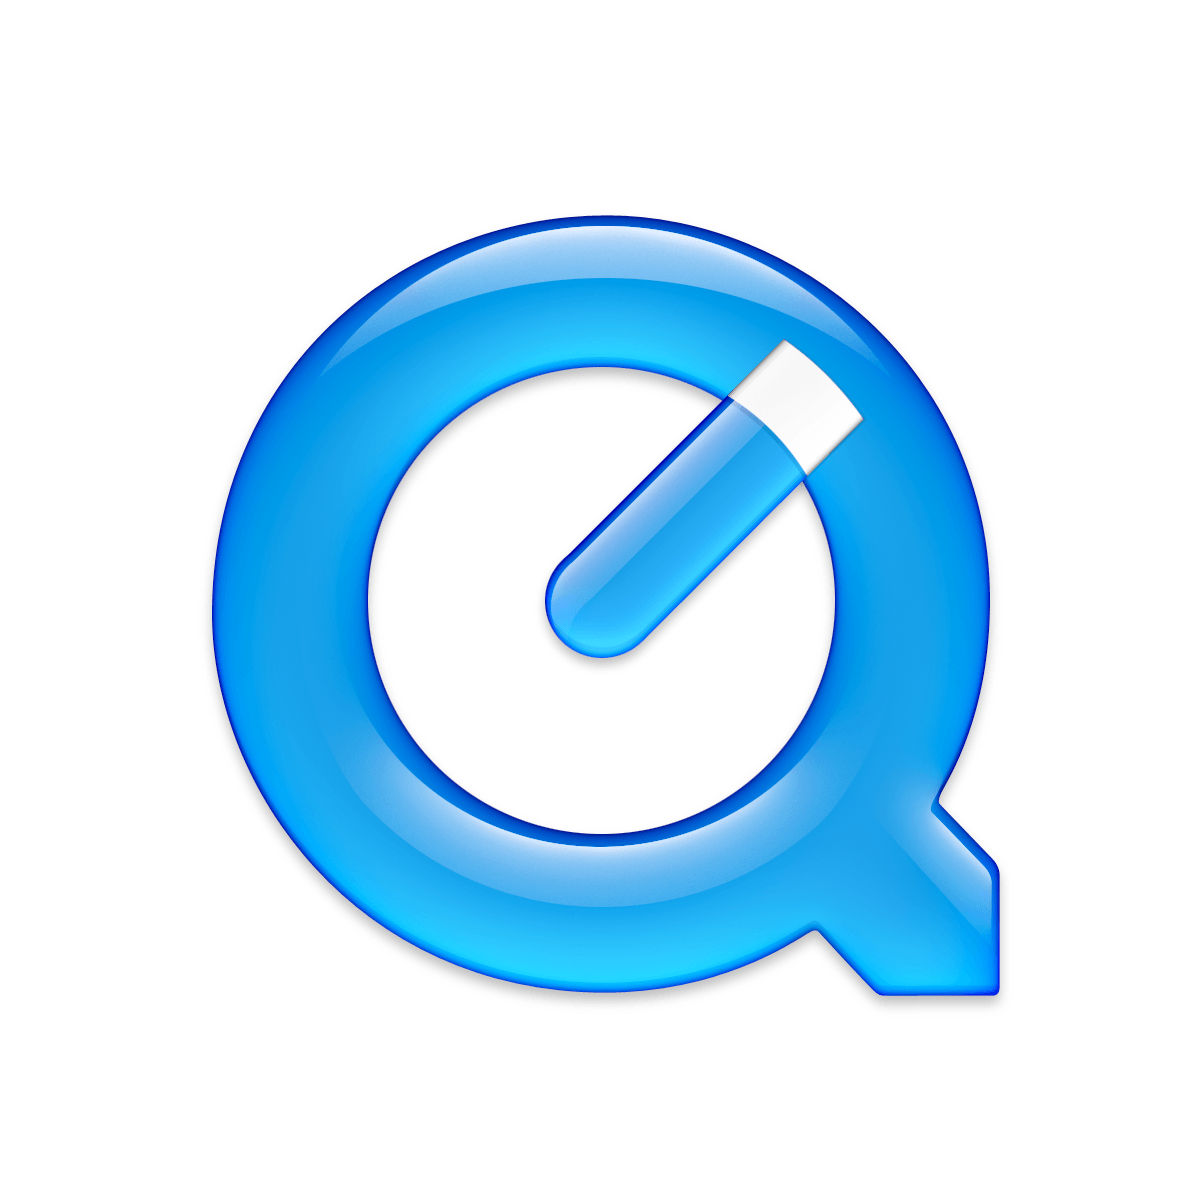 Big Blue Q Logo - Index of /wp/wp-content/uploads/2014/05/